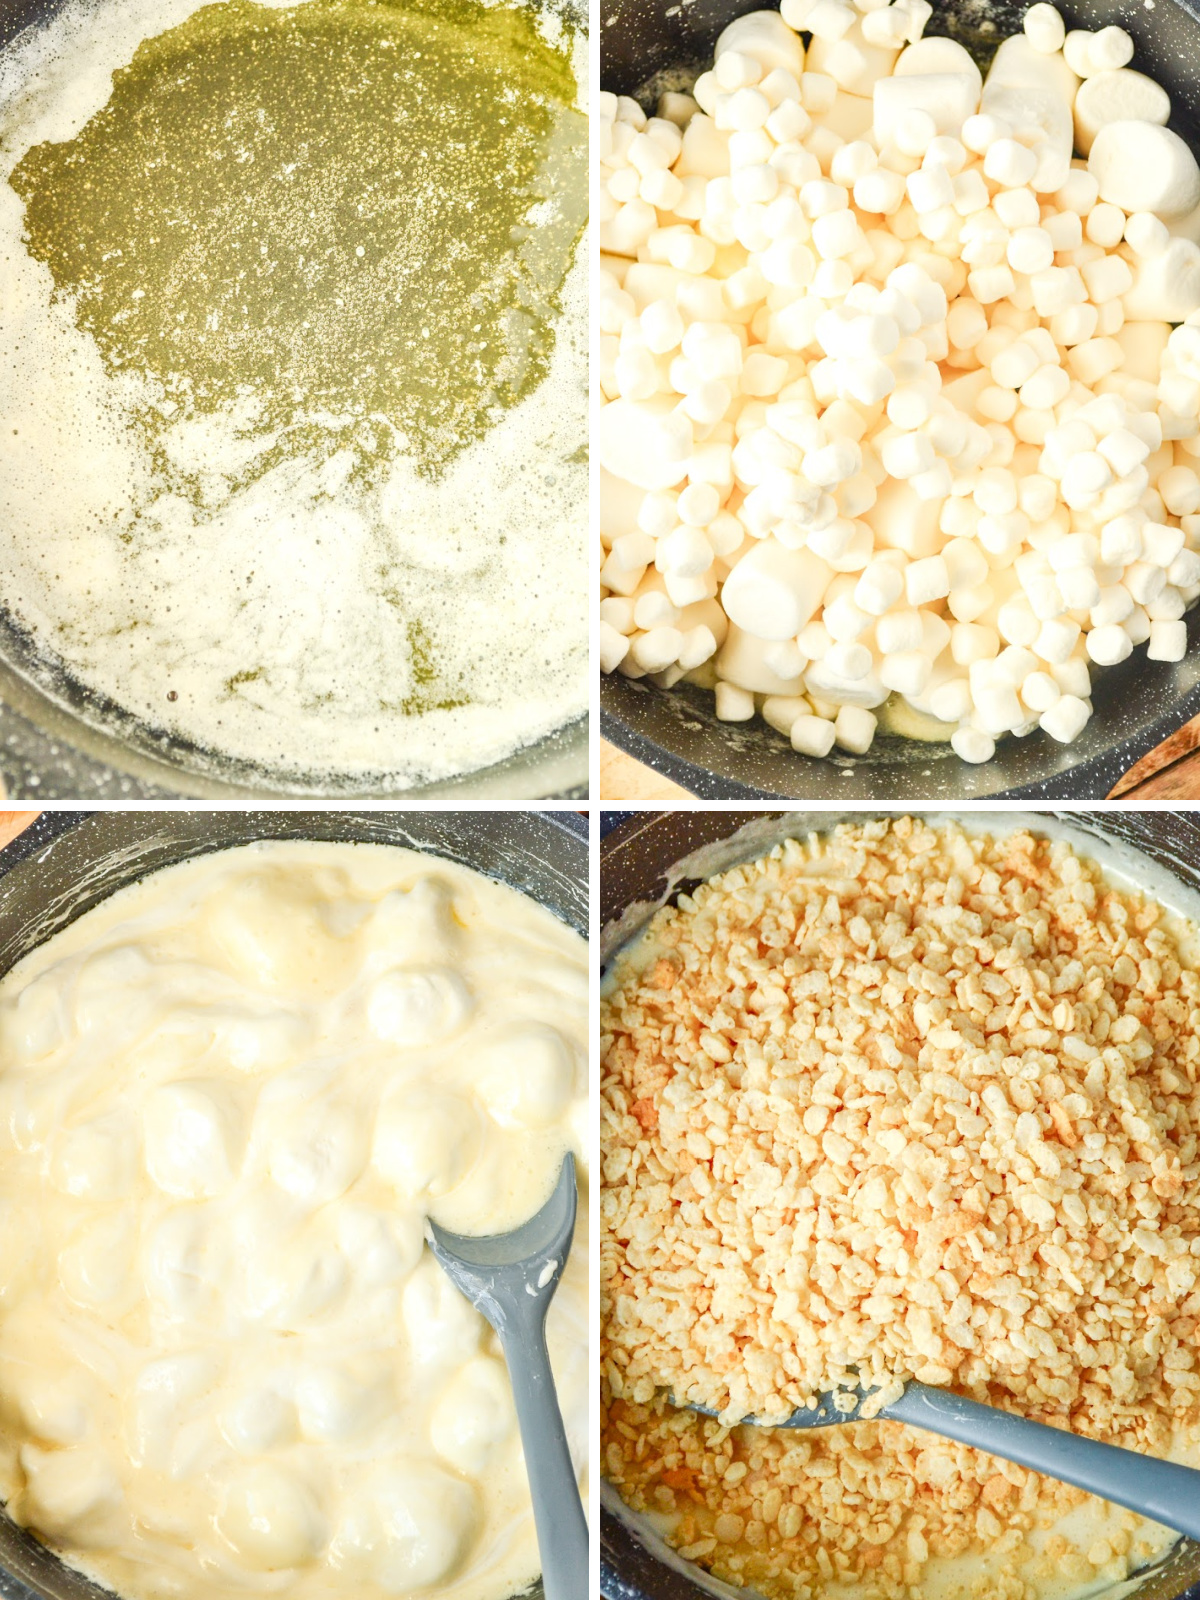 Steps to make easter rice crispy treats